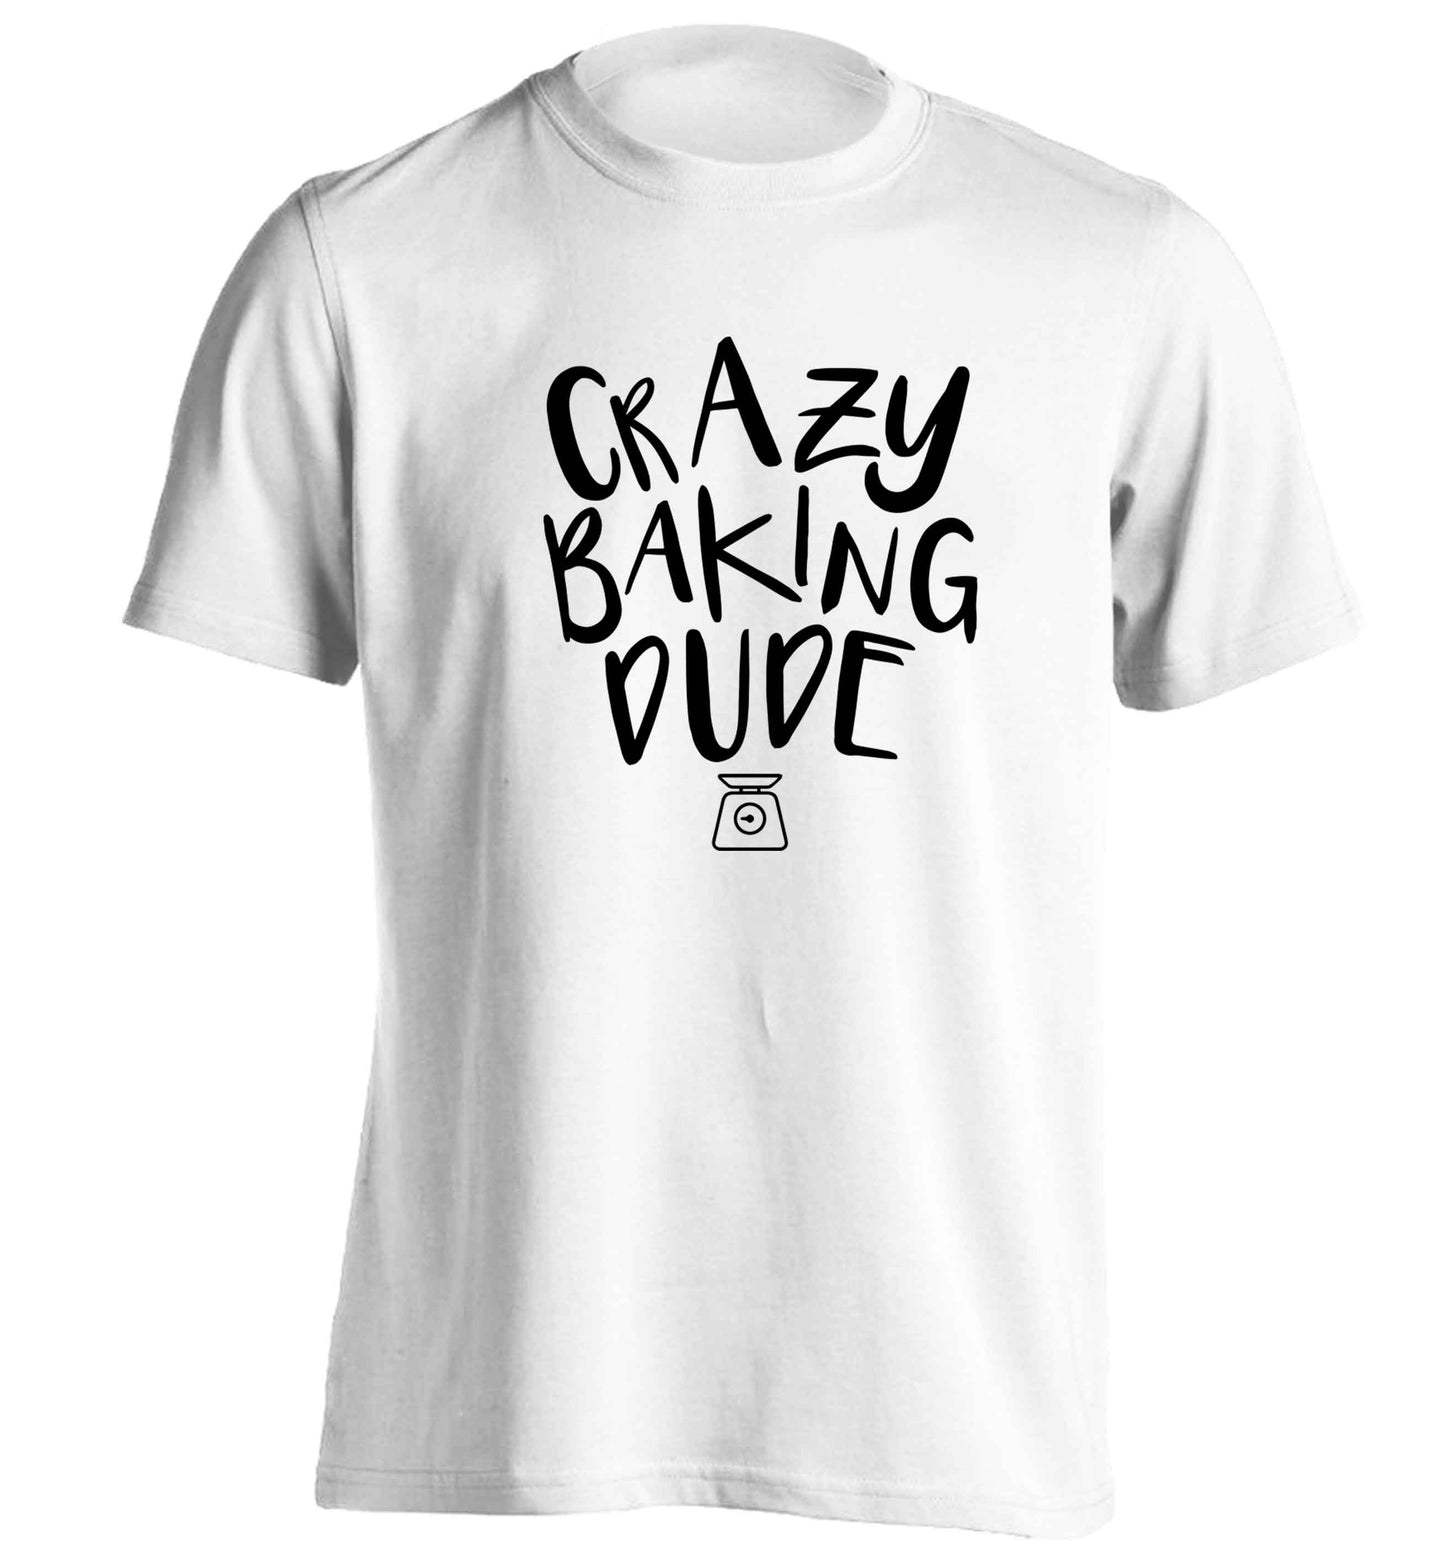 Crazy baking dude adults unisex white Tshirt 2XL